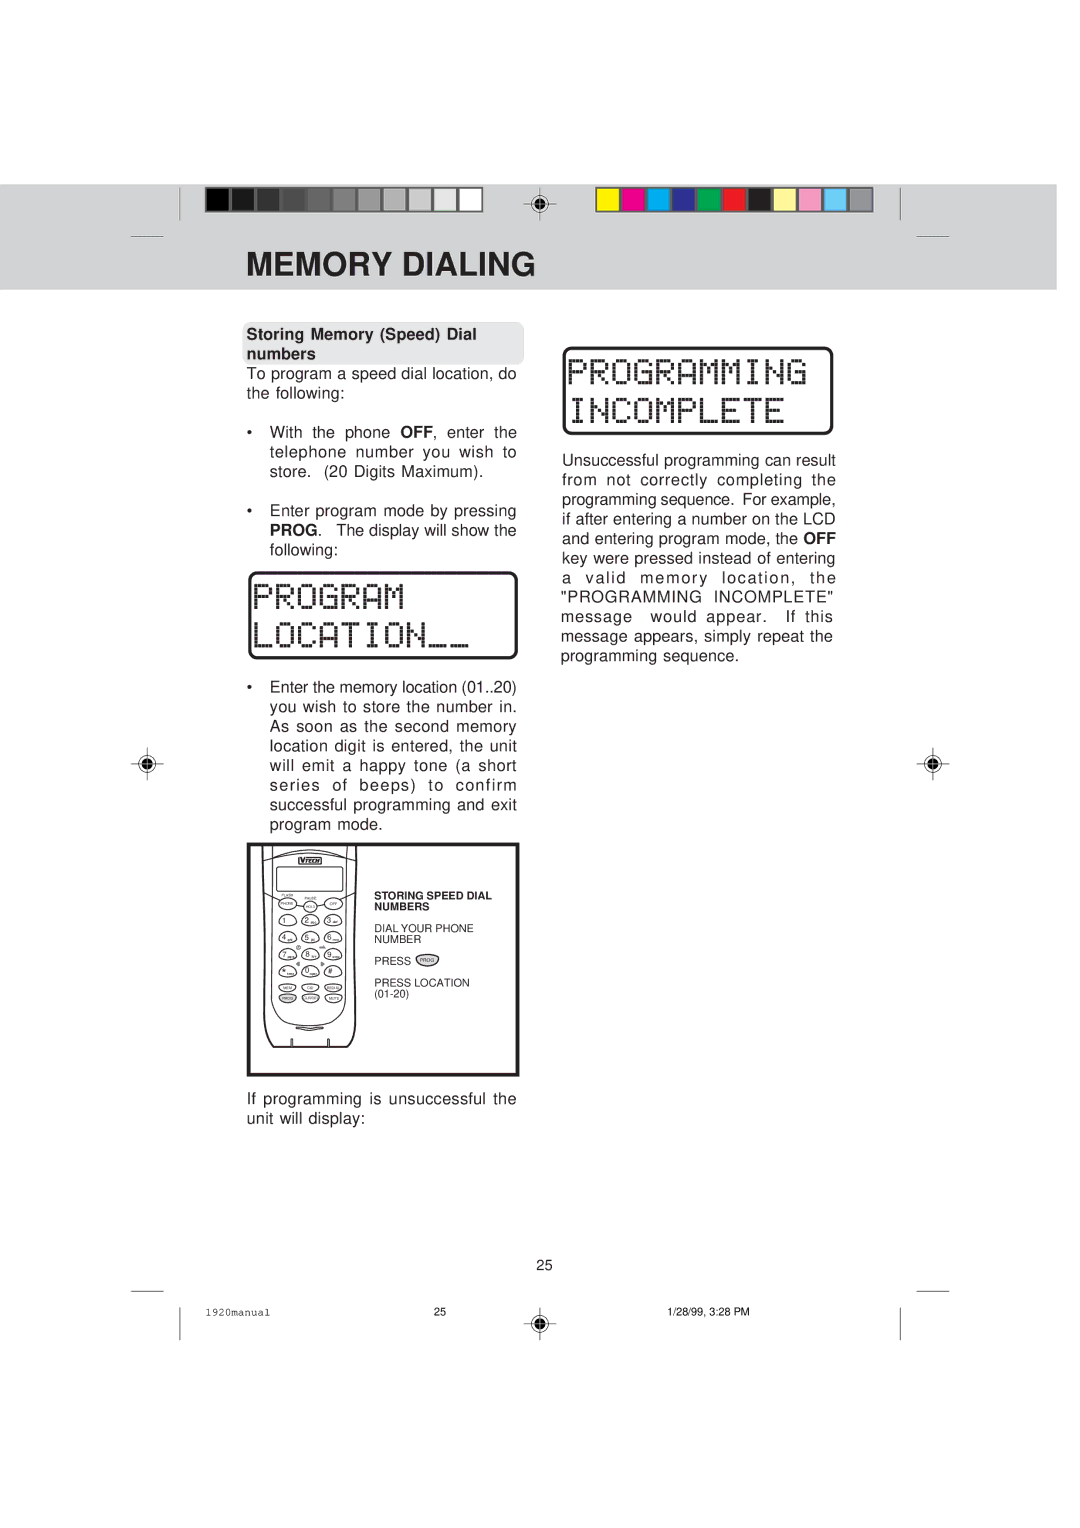 VTech VT 1920C manual Memory Dialing, Storing Memory Speed Dial numbers 